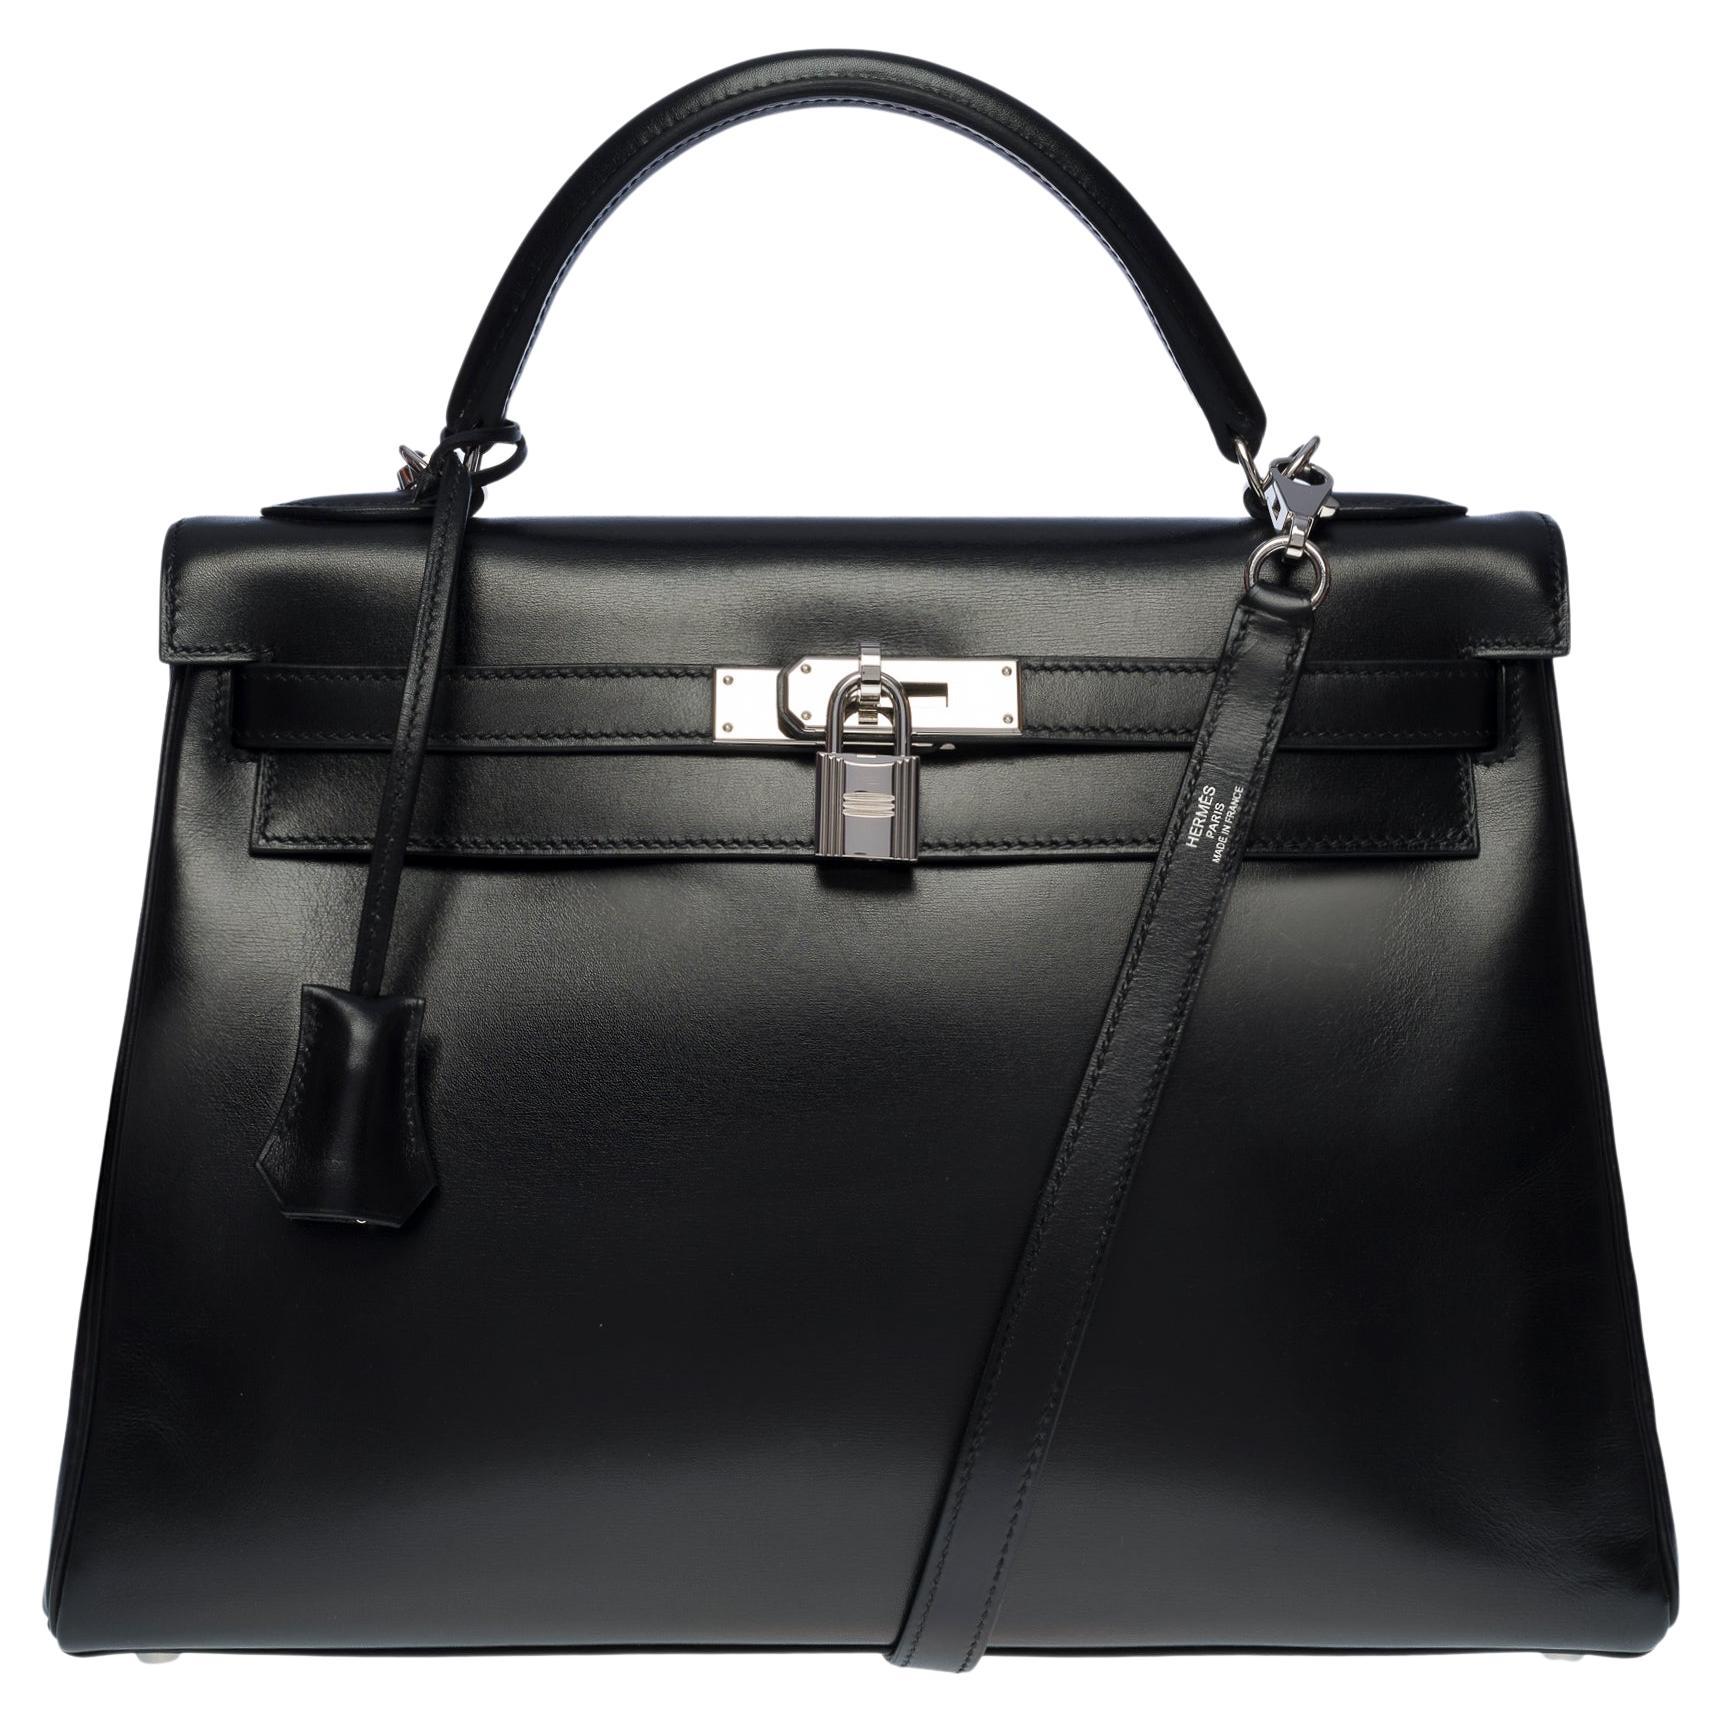 Rare Hermès Kelly 32 retourne handbag strap in black box calf leather, SHW